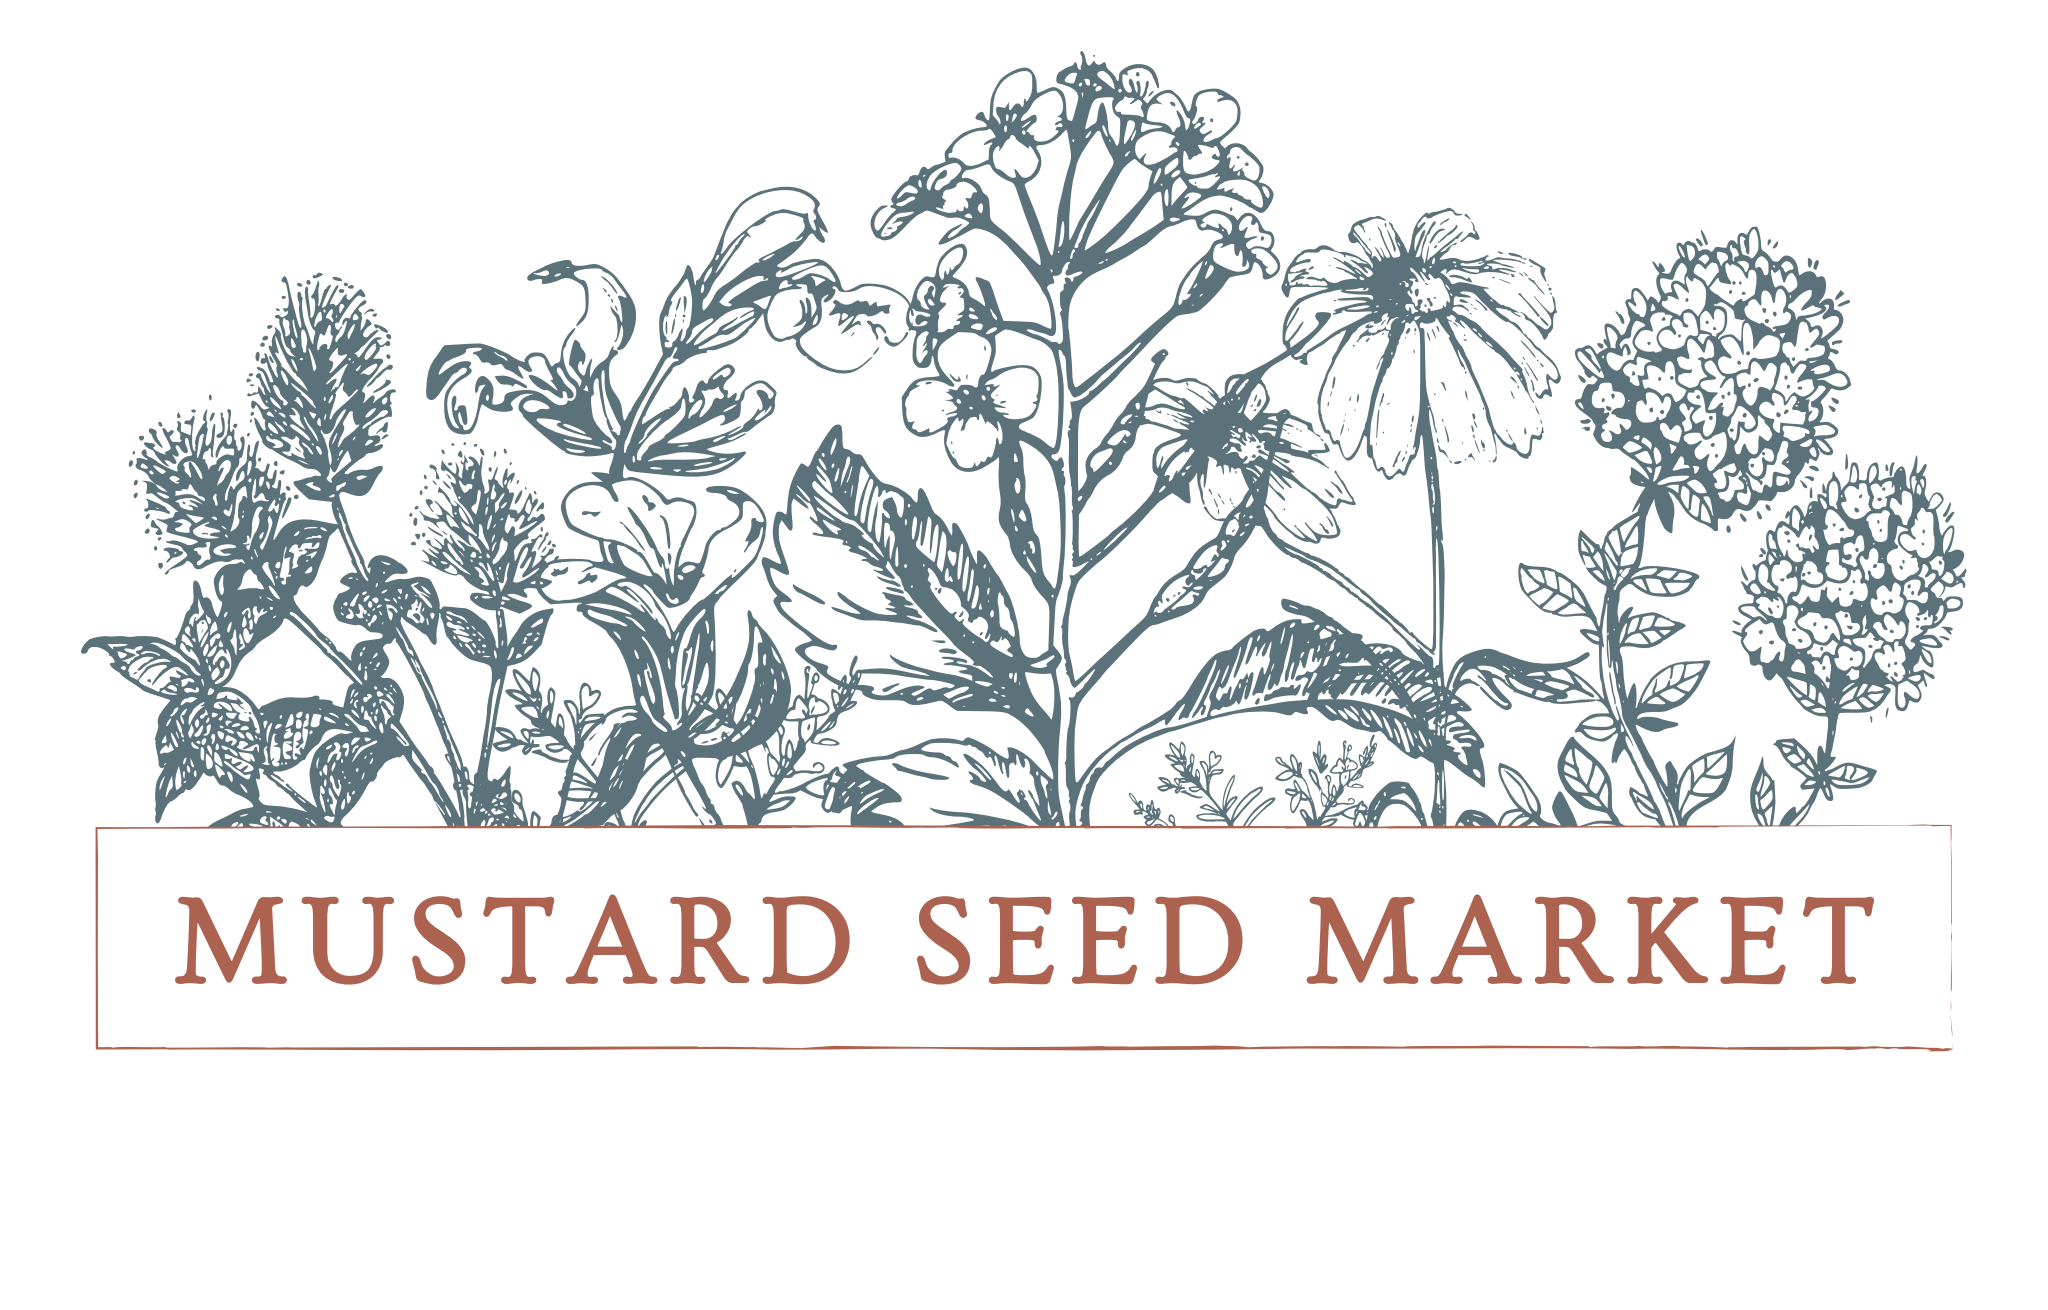 Mustard Seed Market Merch